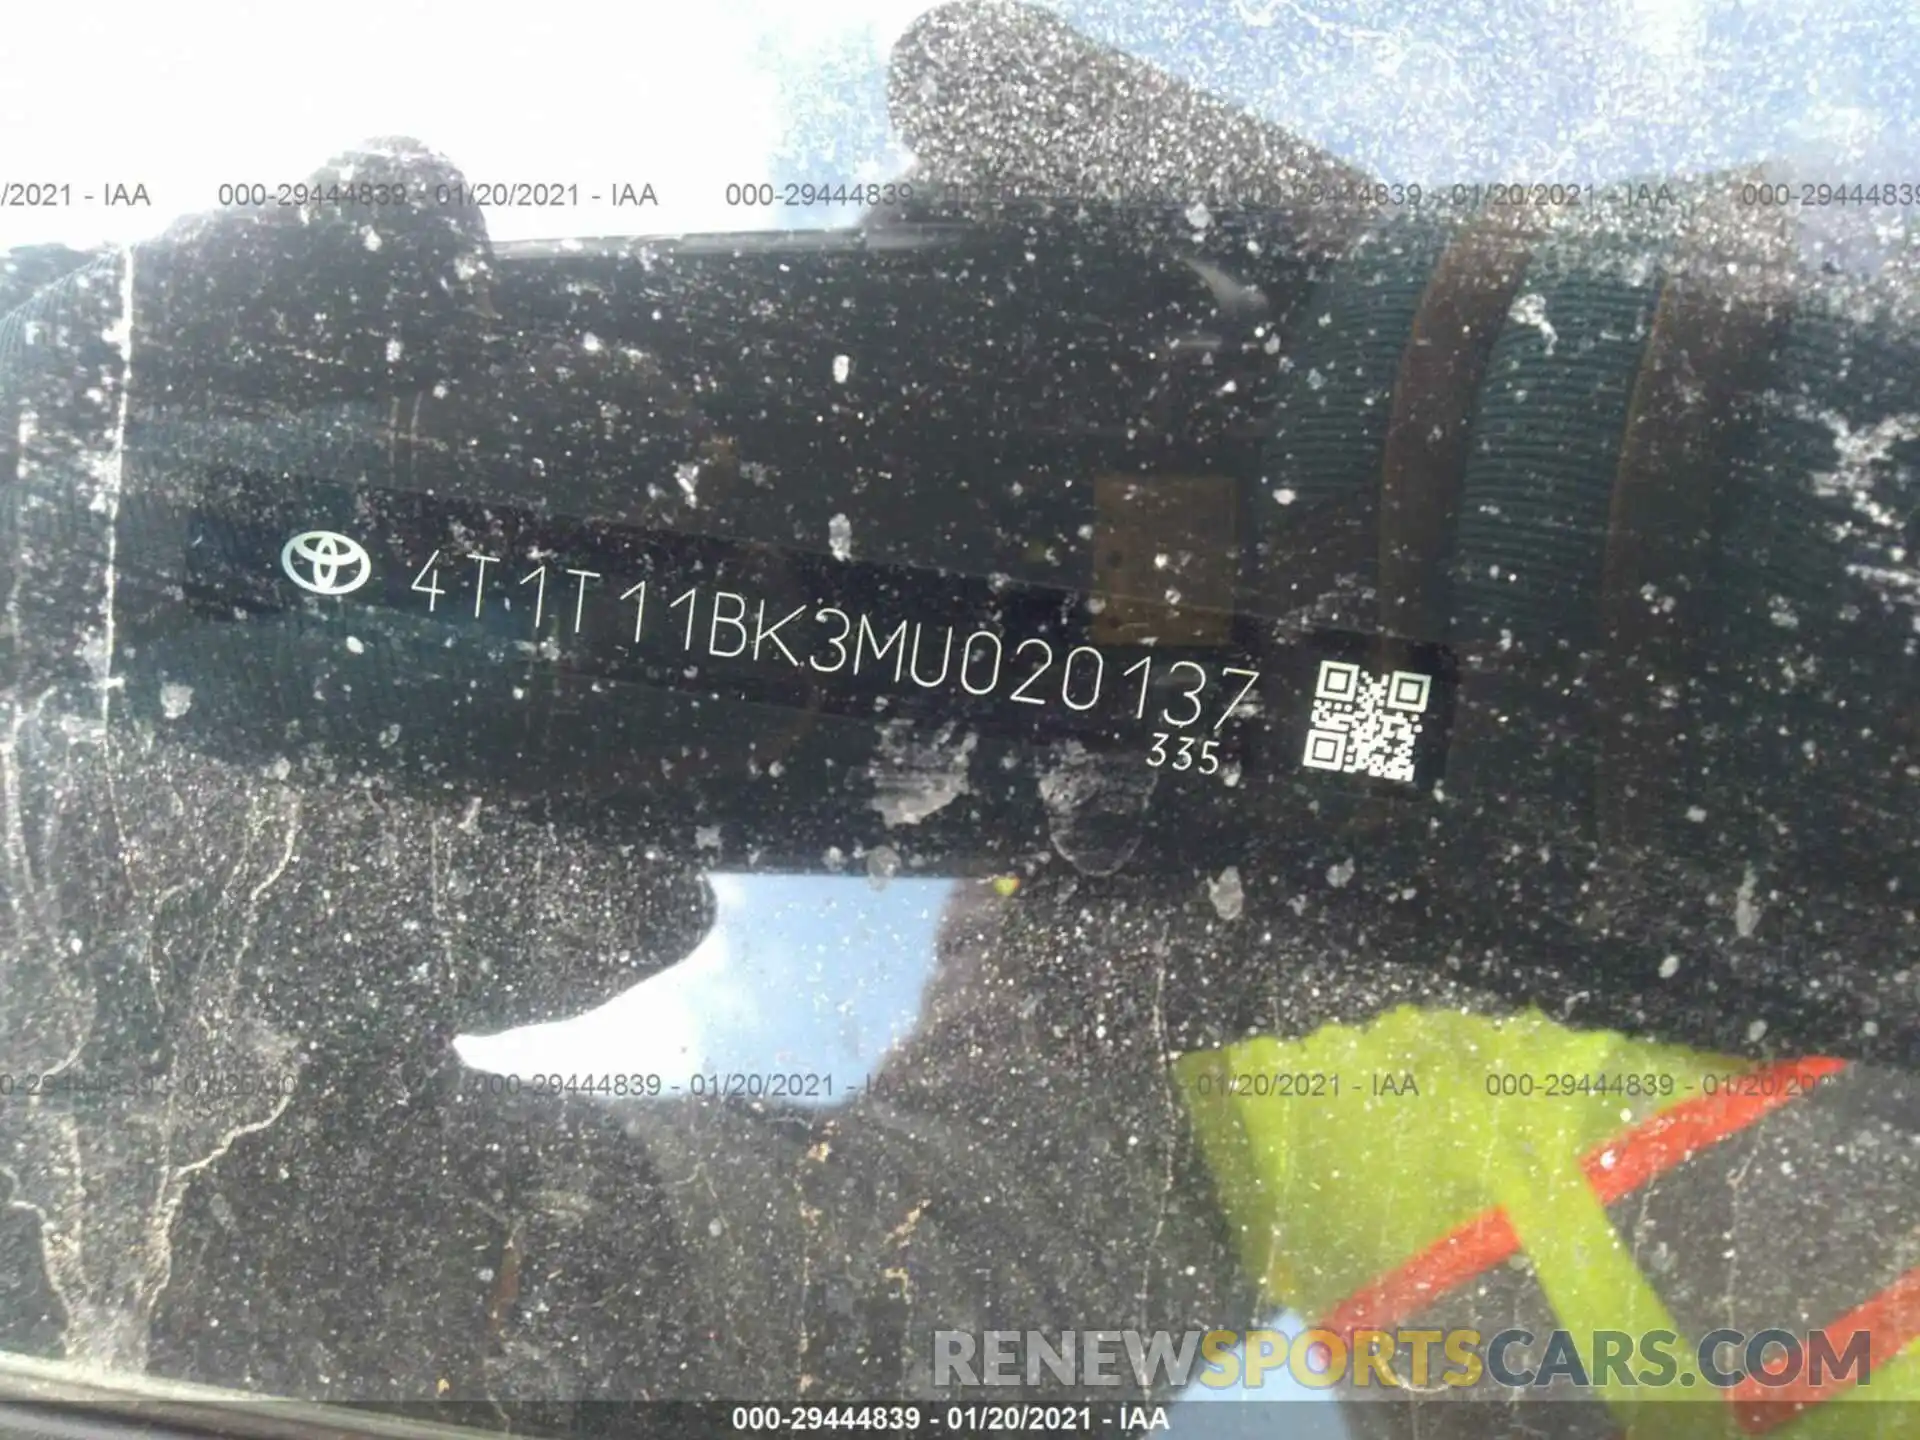 9 Photograph of a damaged car 4T1T11BK3MU020137 TOYOTA CAMRY 2021